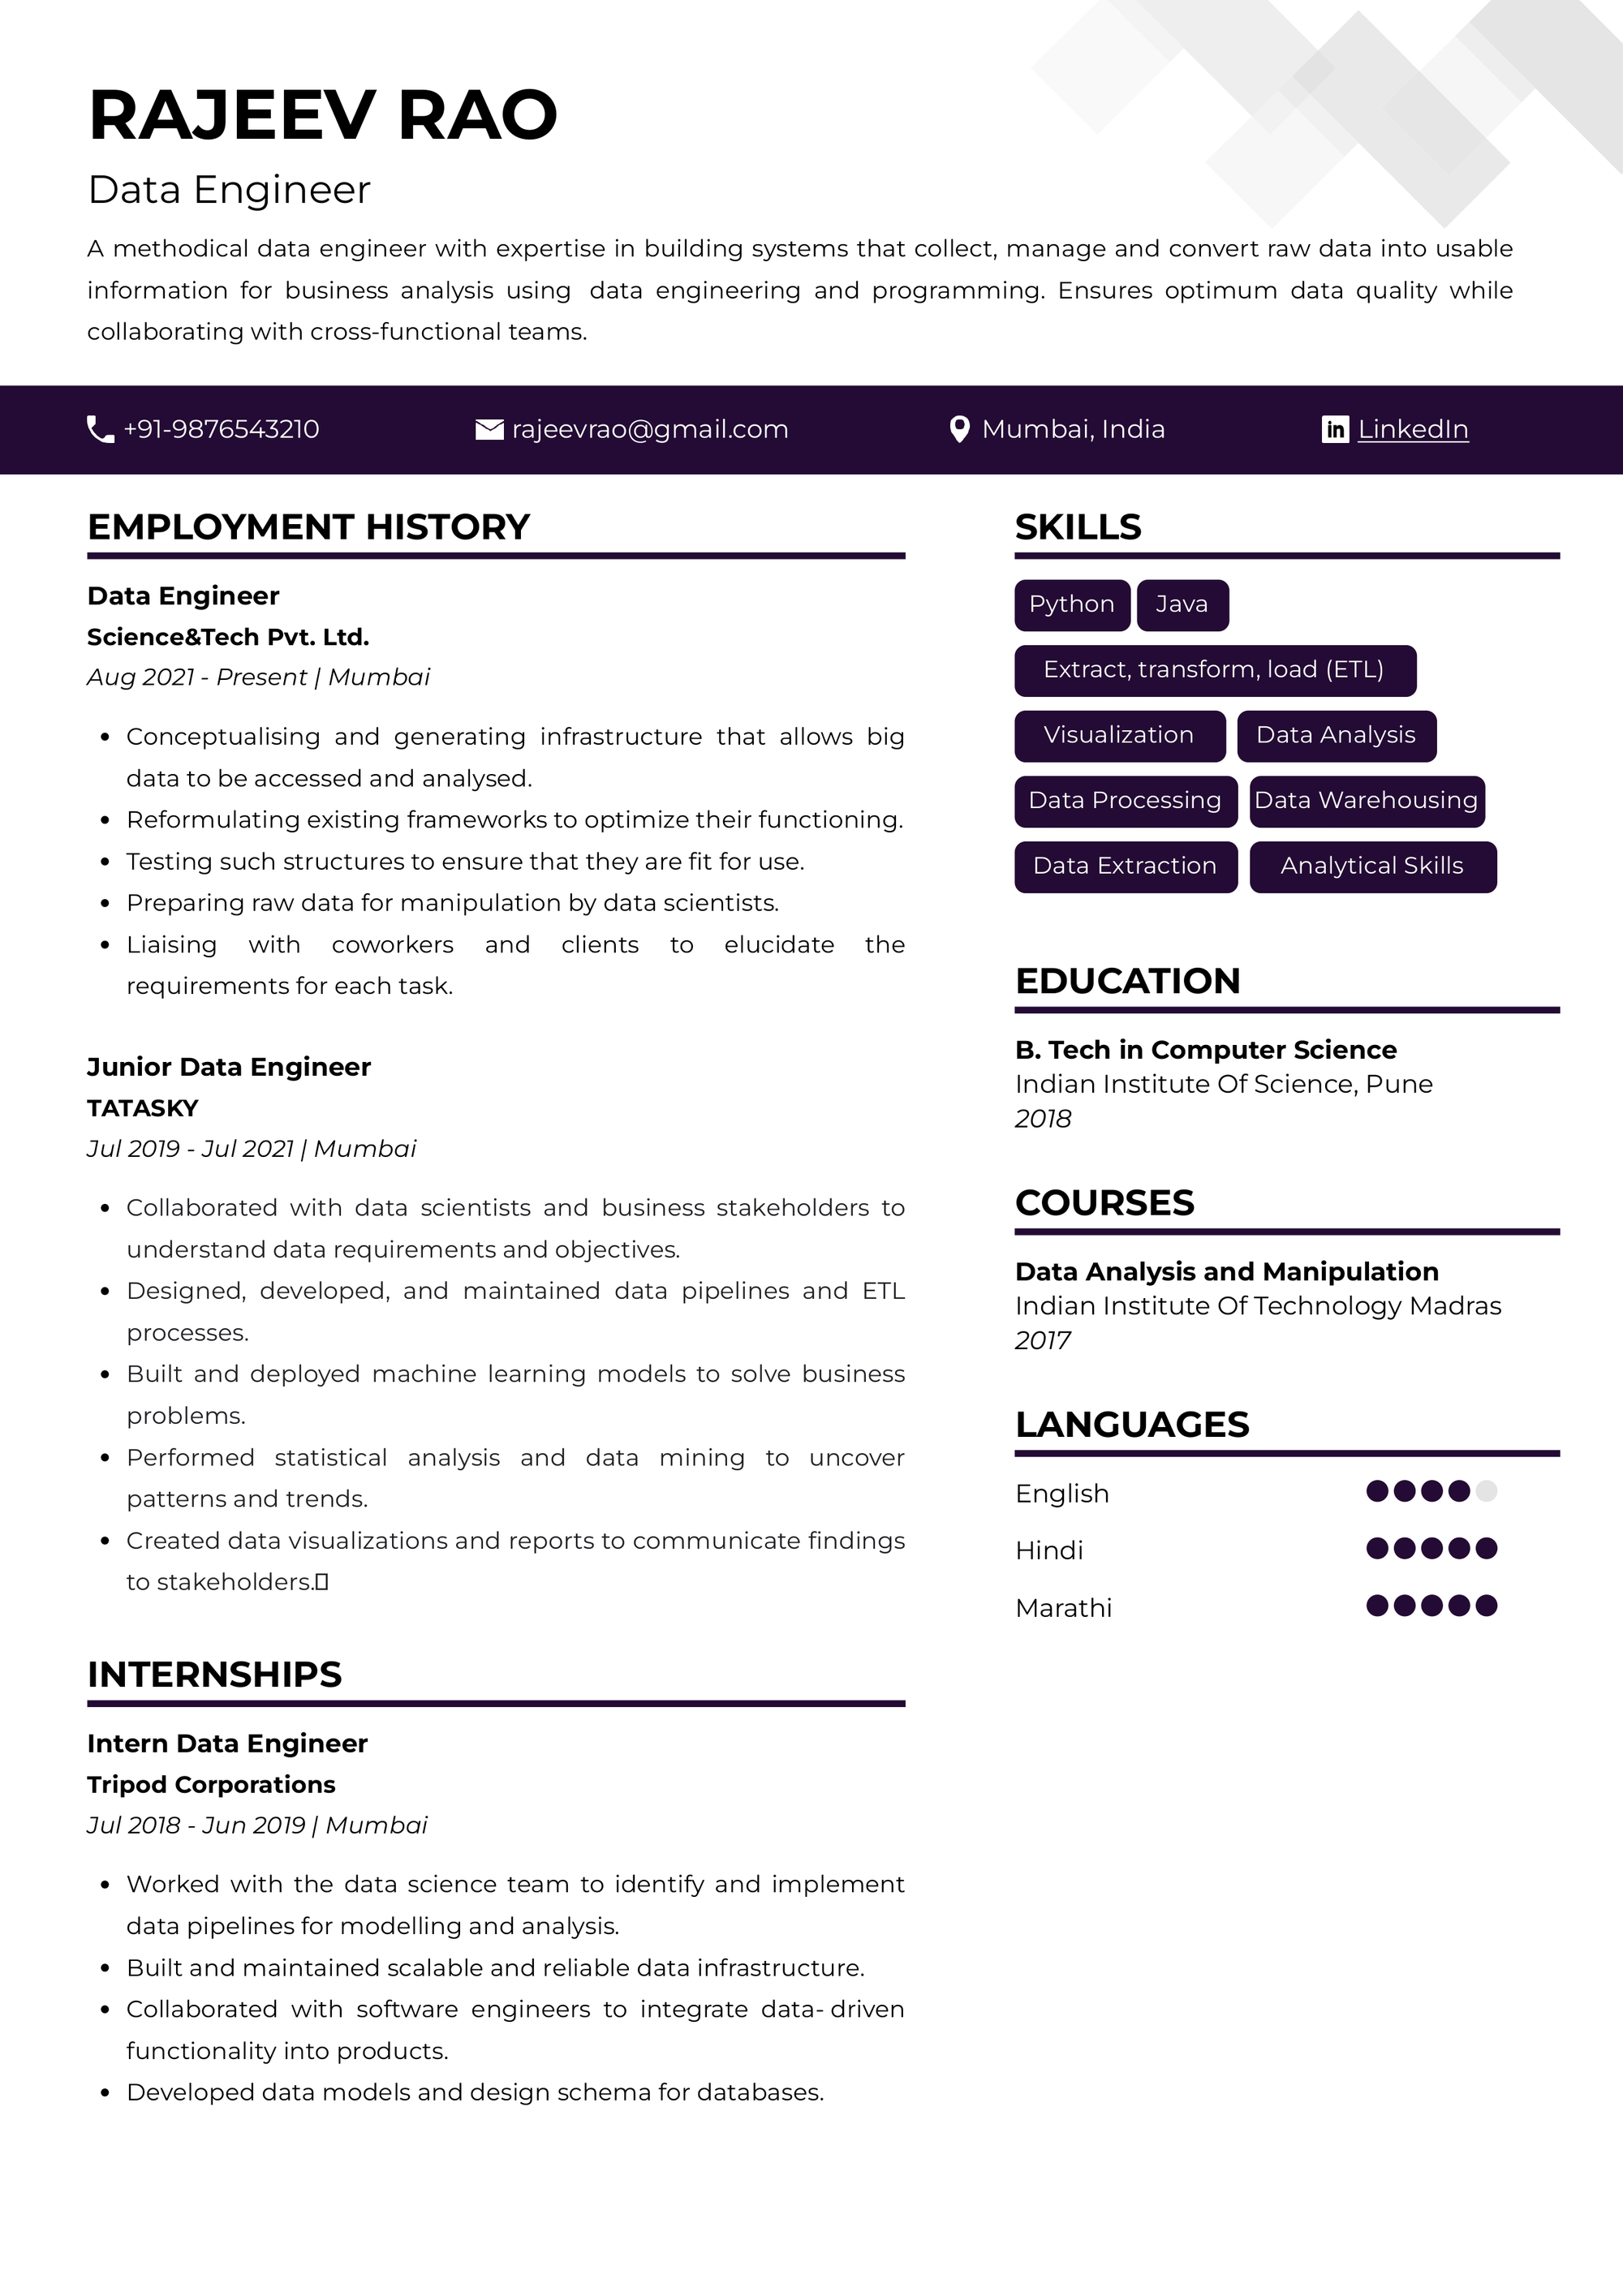 Resume of Data Engineer built on Resumod